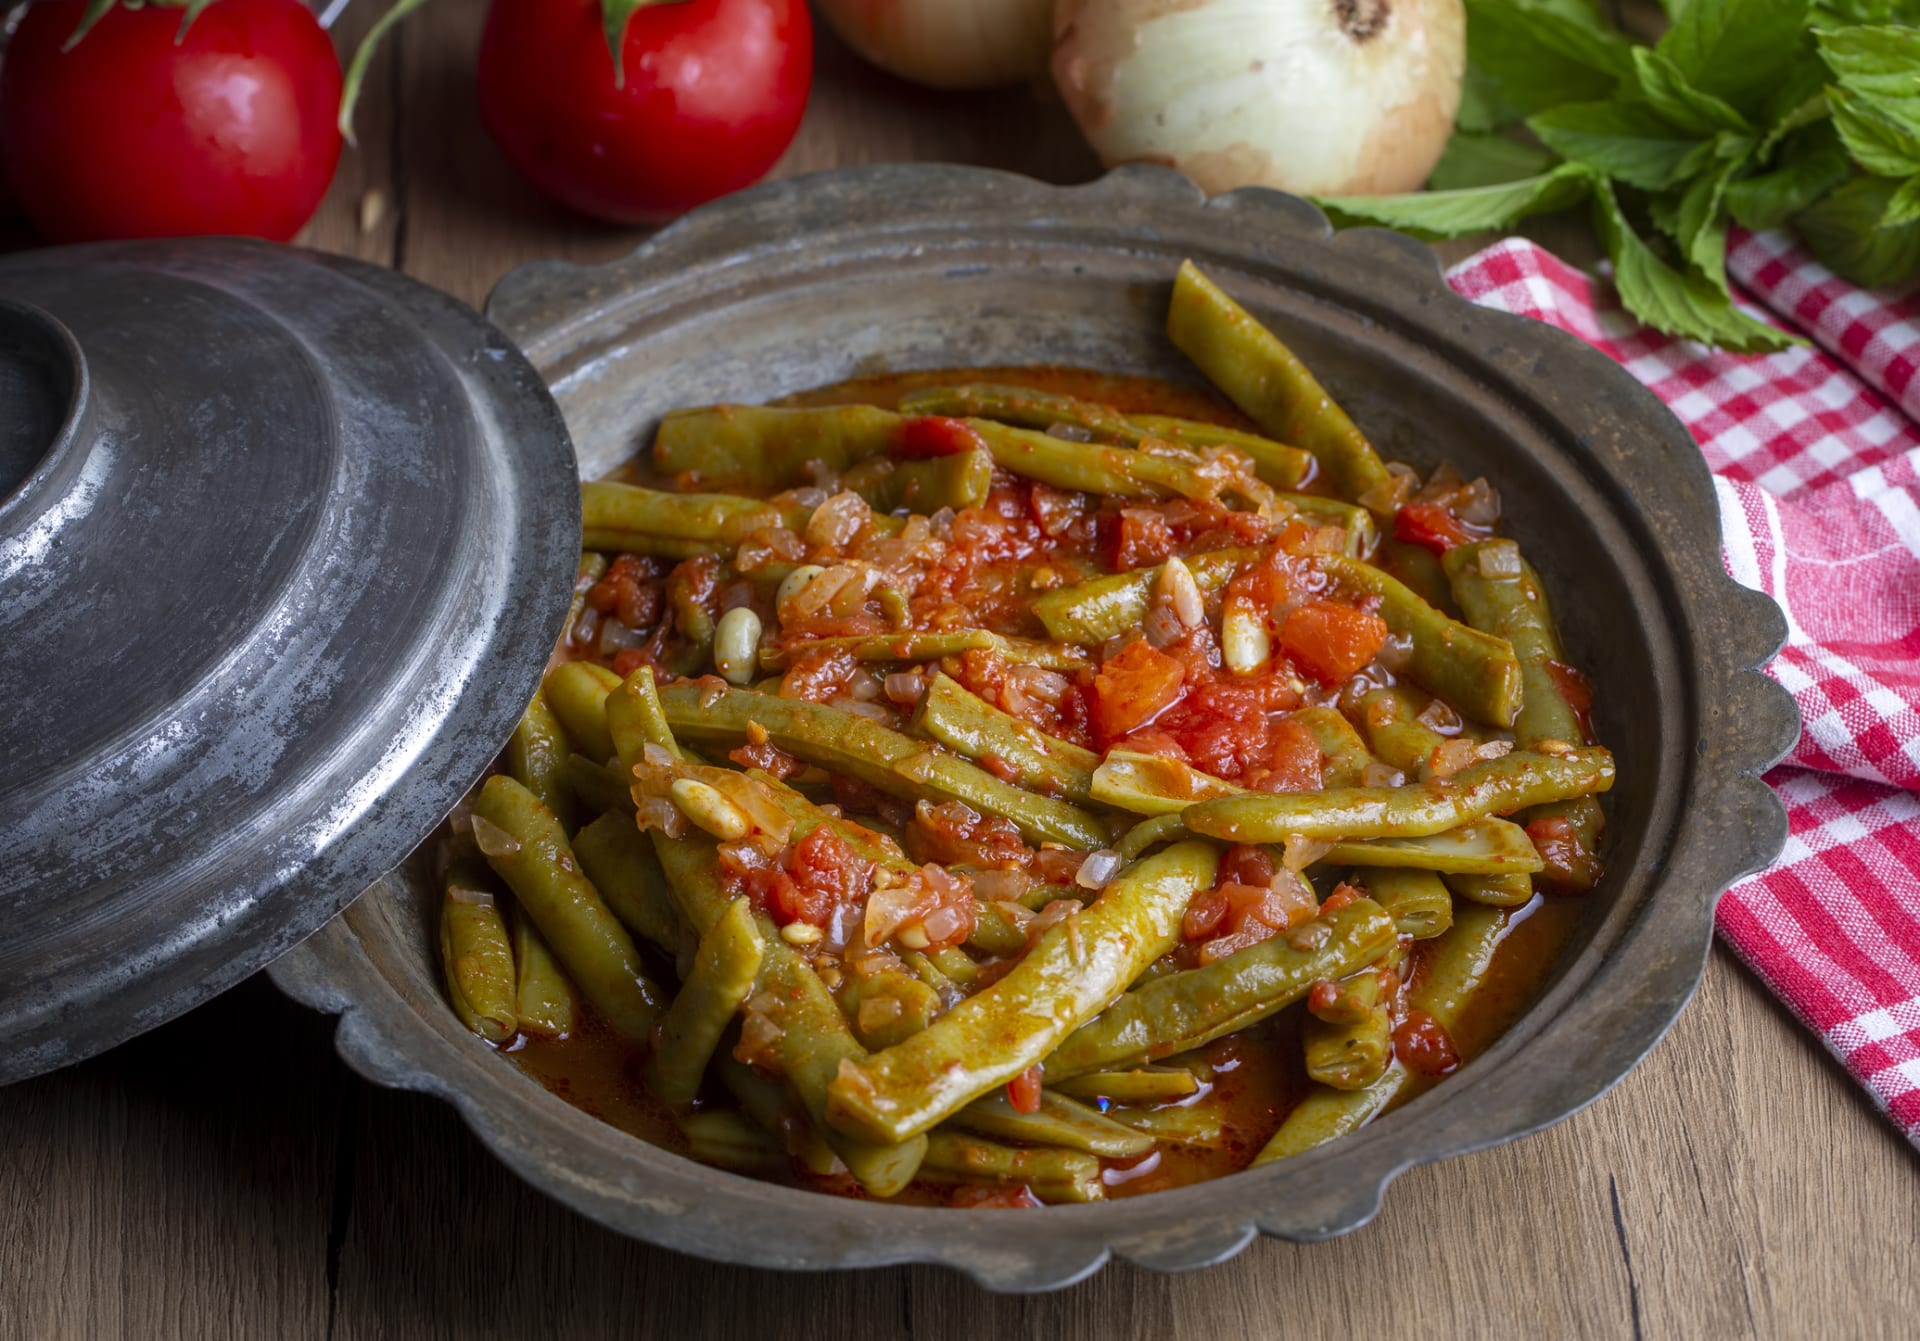 Zeytinyağlı Taze Fasulye – zelené fazolky s rajčaty po turecku